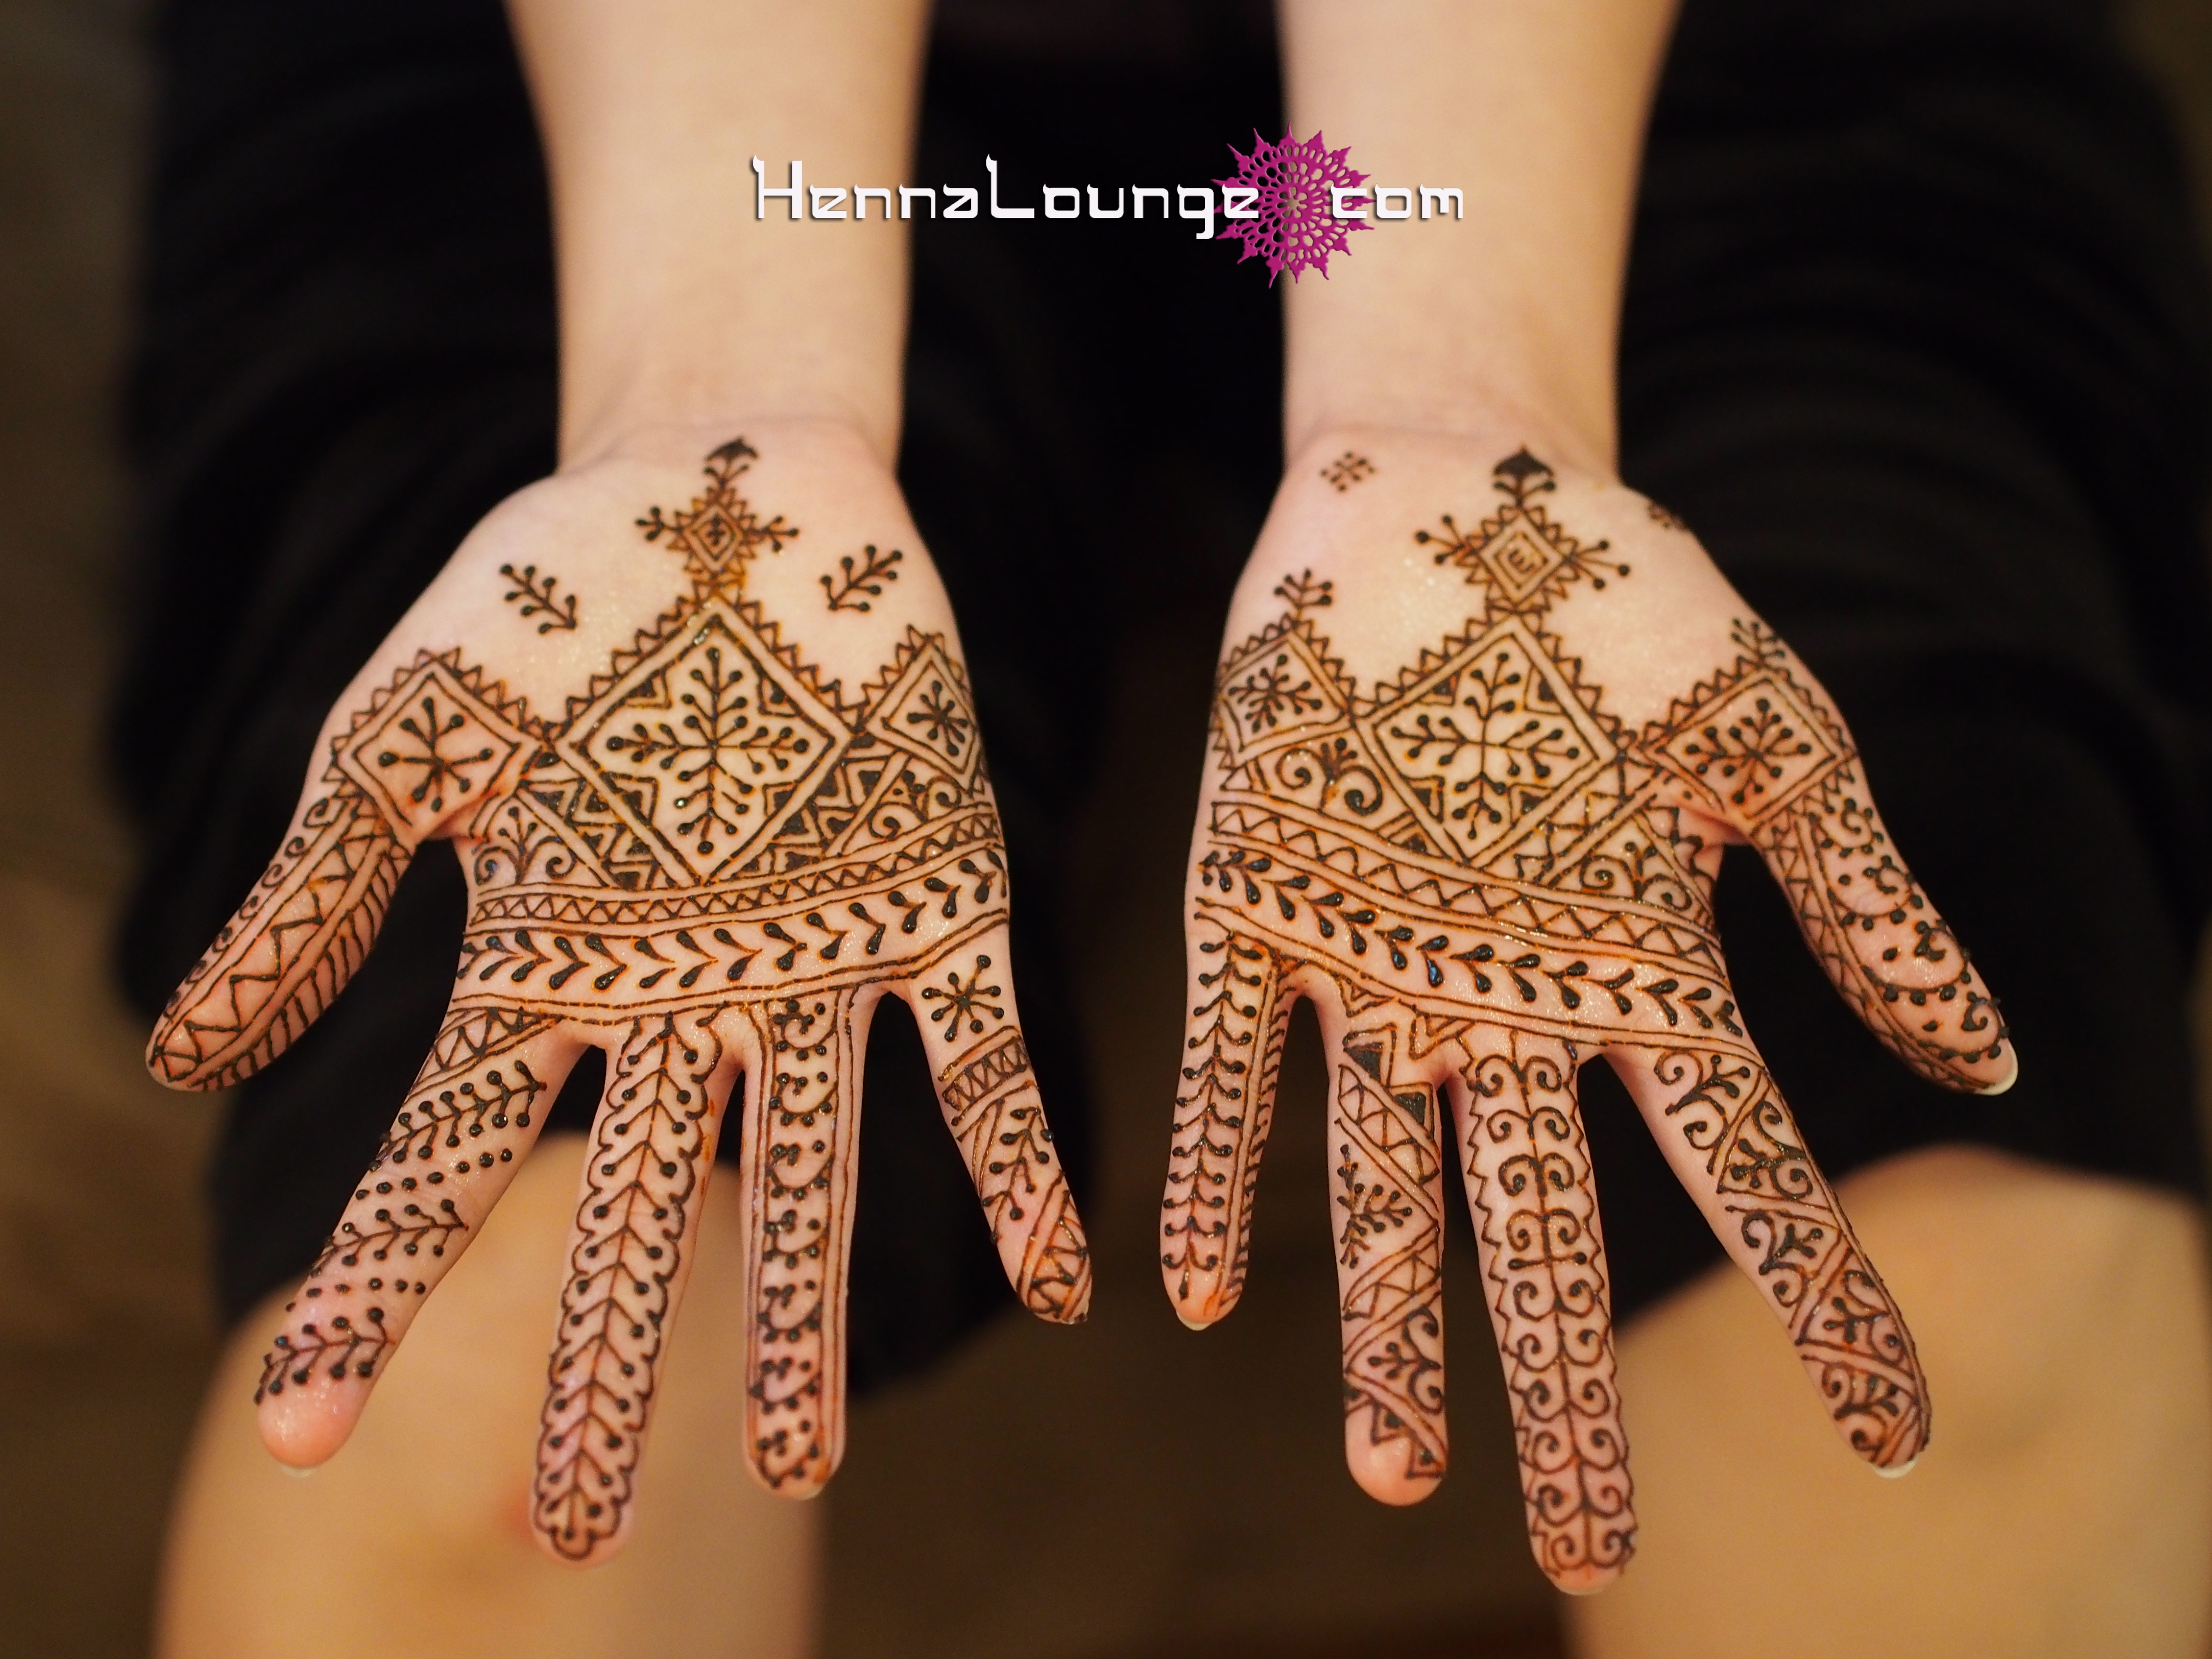 Moroccan Henna | Henna Lounge